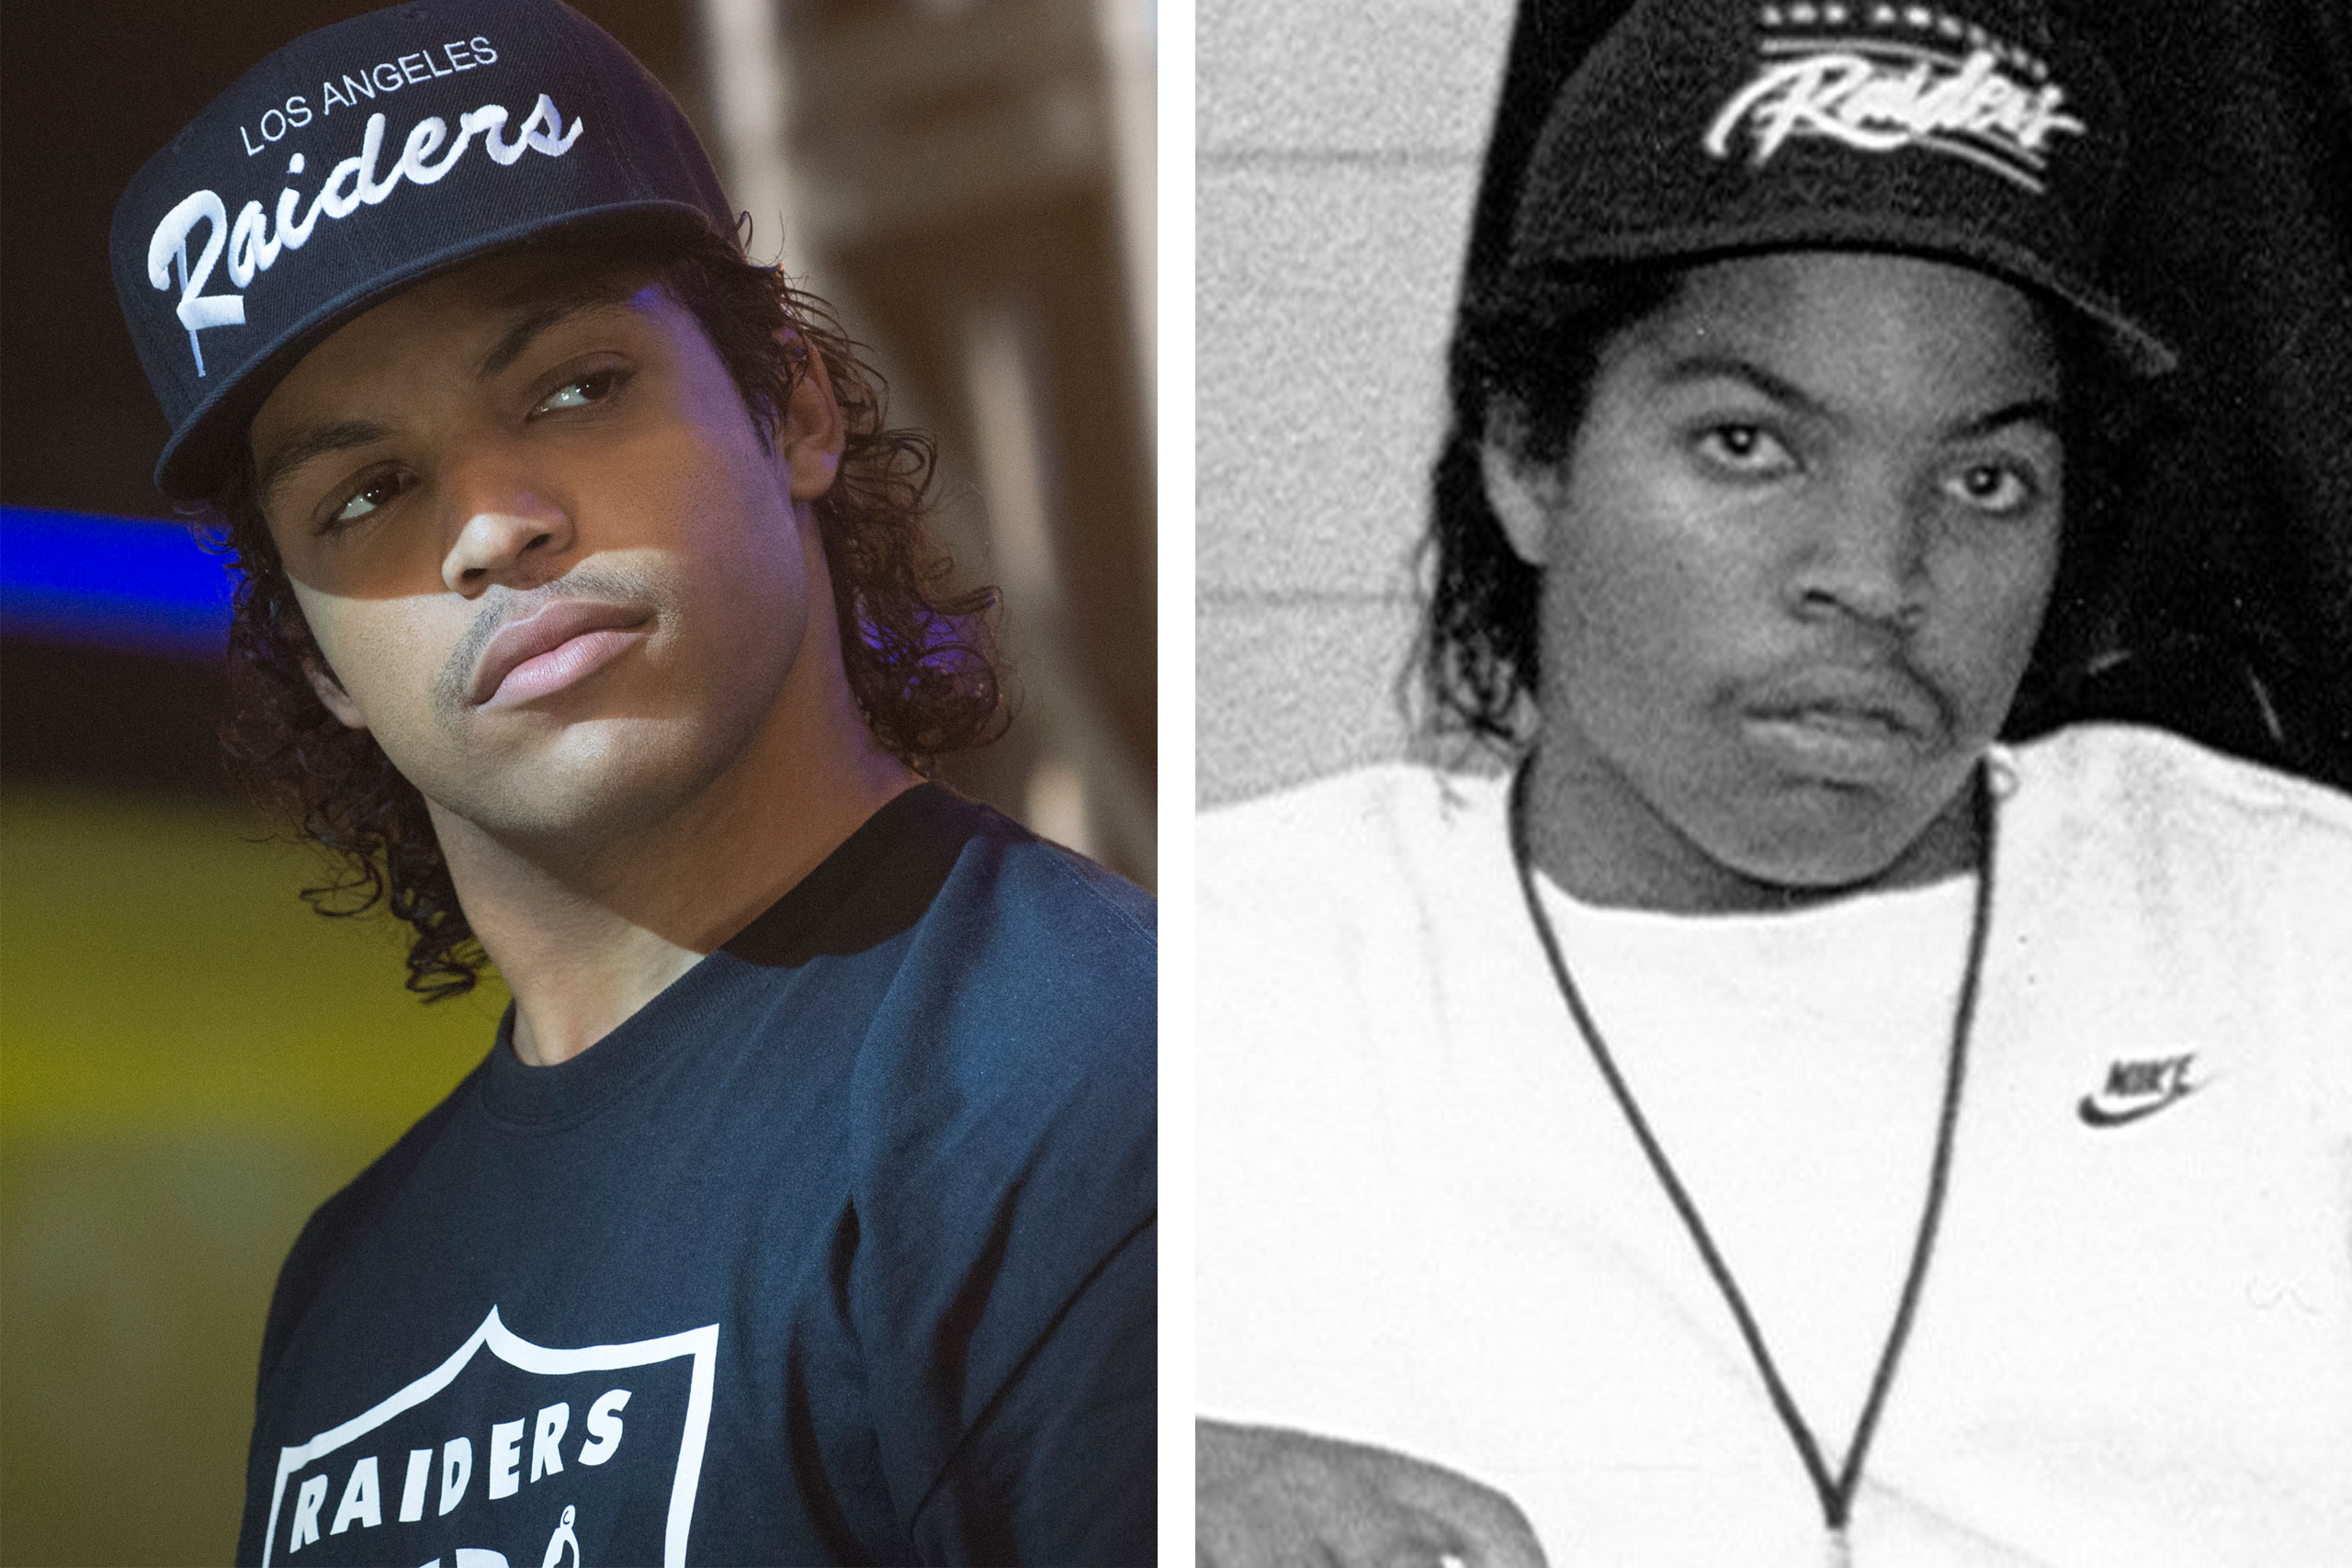 O'Shea Jackson, Jr. (Ice Cube's real life son) as Ice Cube